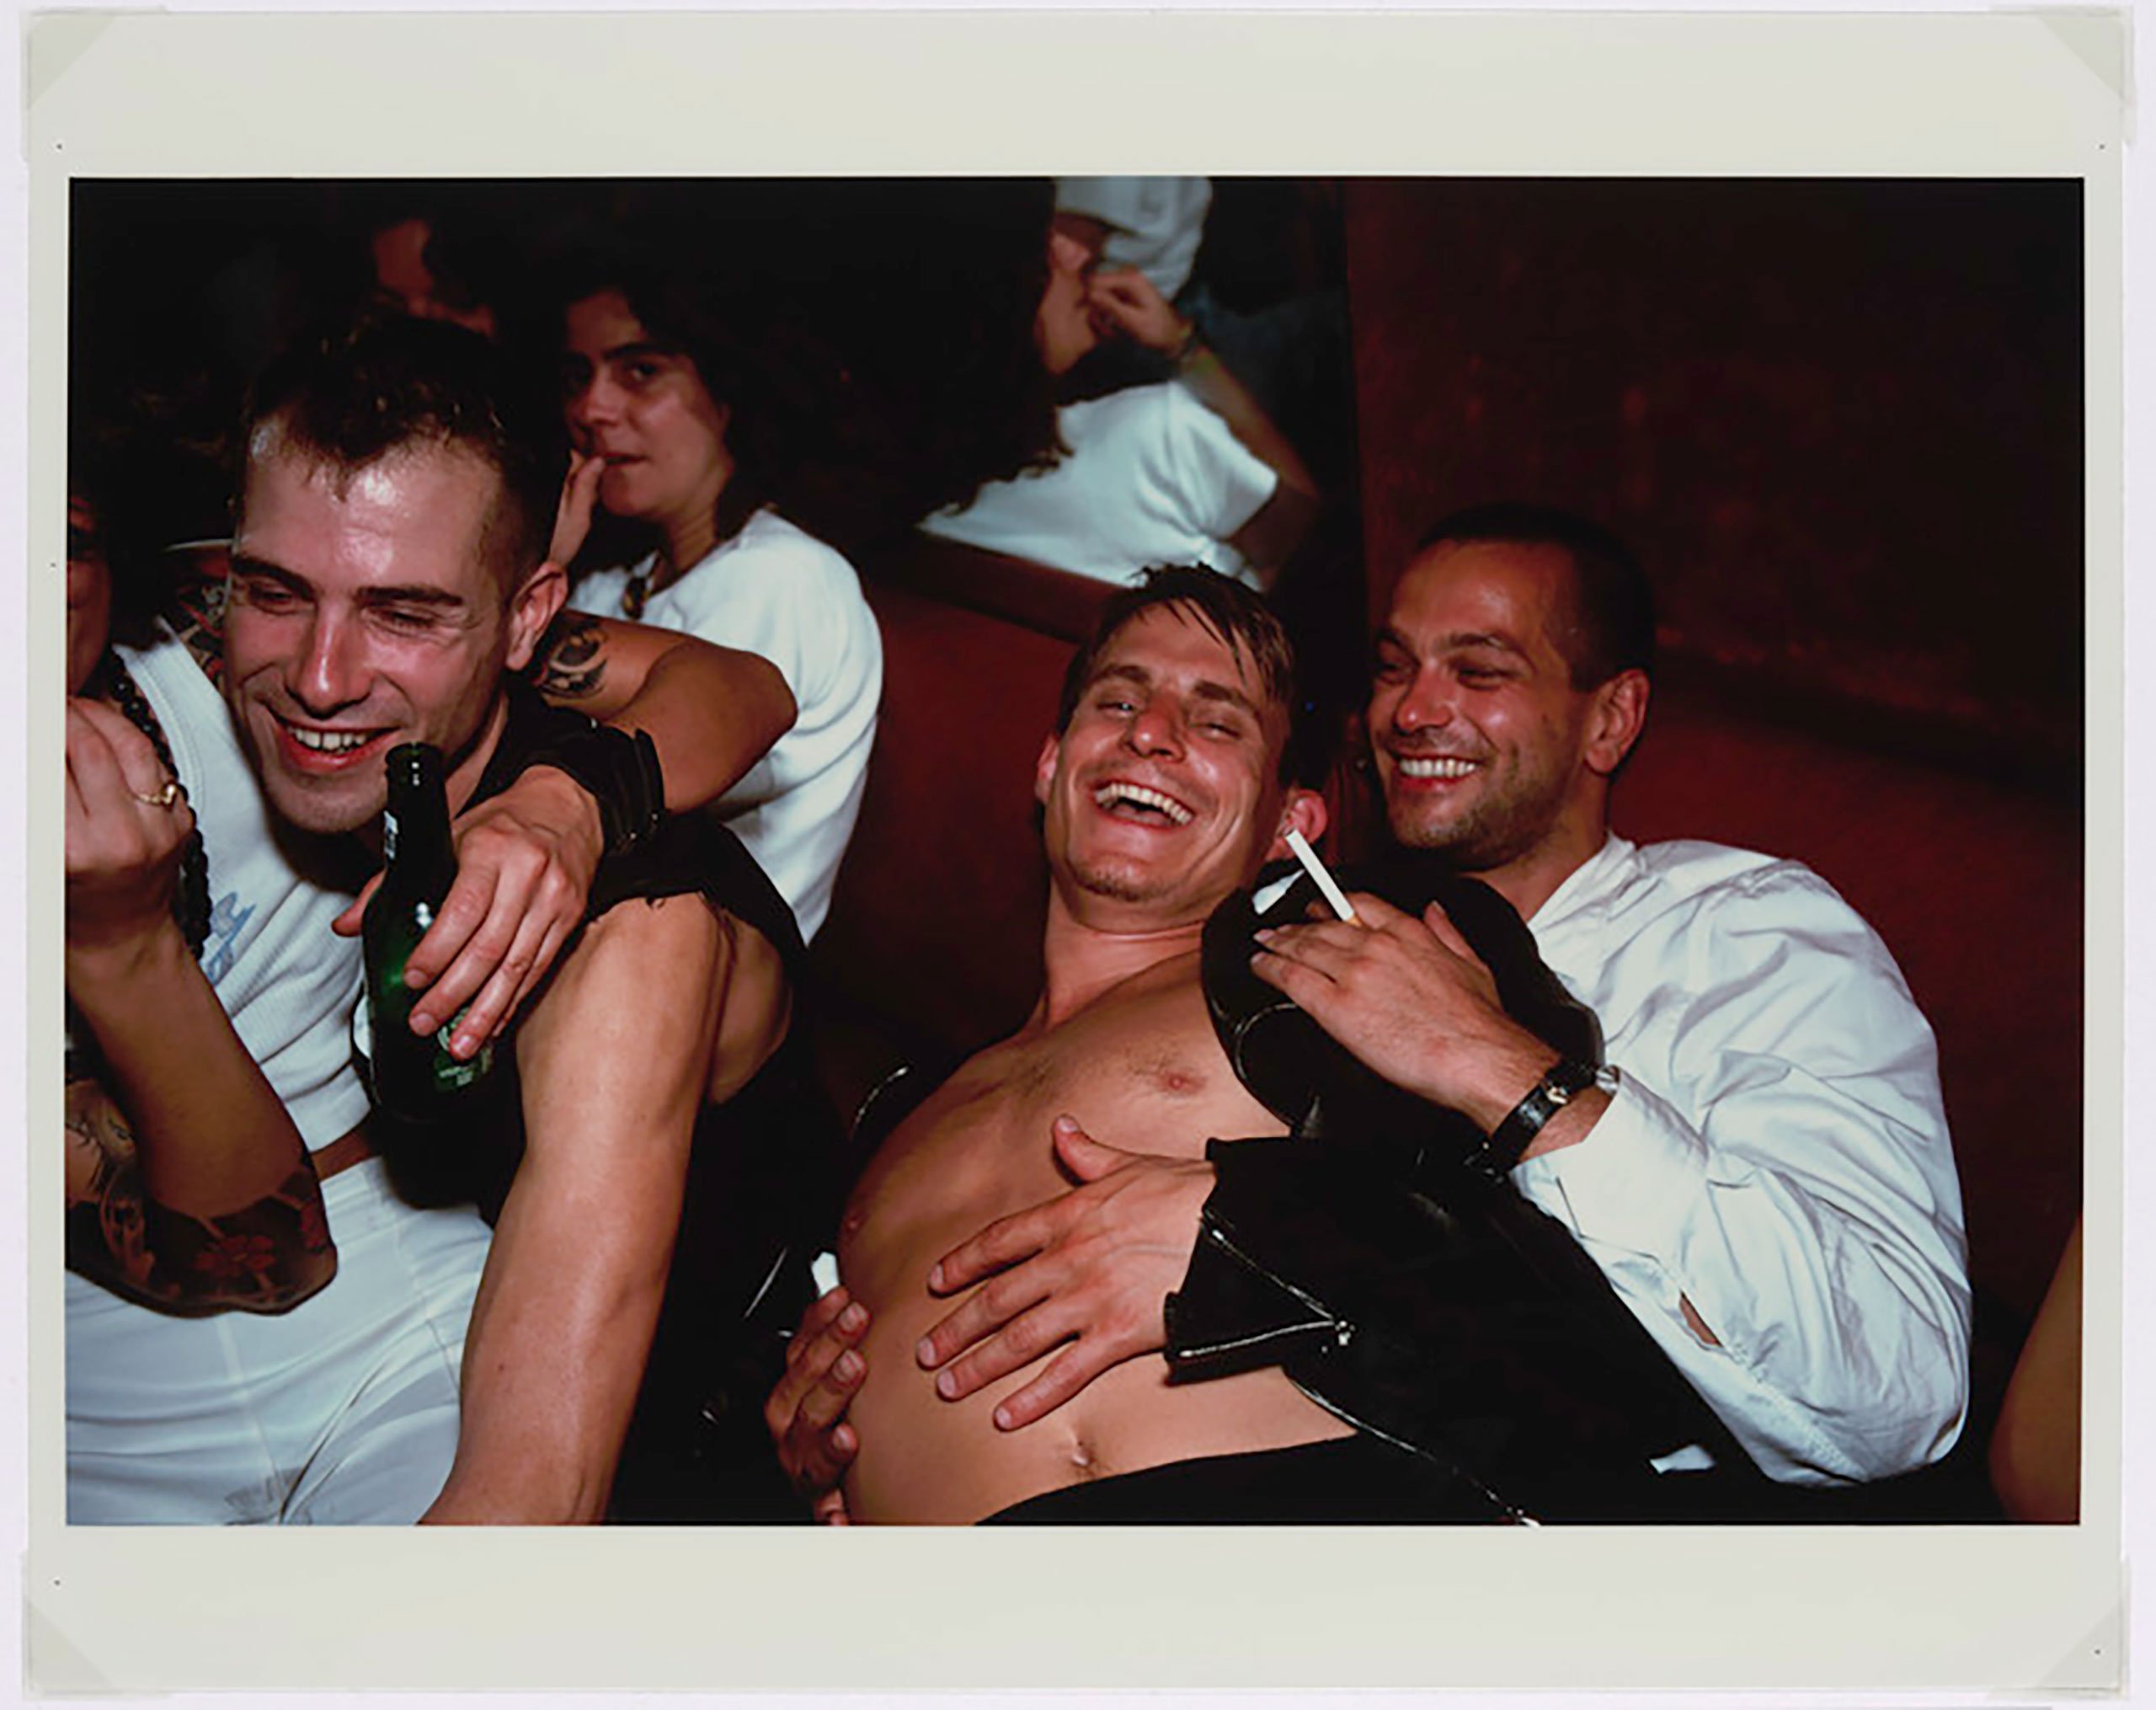 Nan Goldin, Clemens, Jens and Nicolas Laughing at Le Pulp, Paris, 1999.
© Nan Goldin. Courtesy of Nan Goldin and Gagosian.